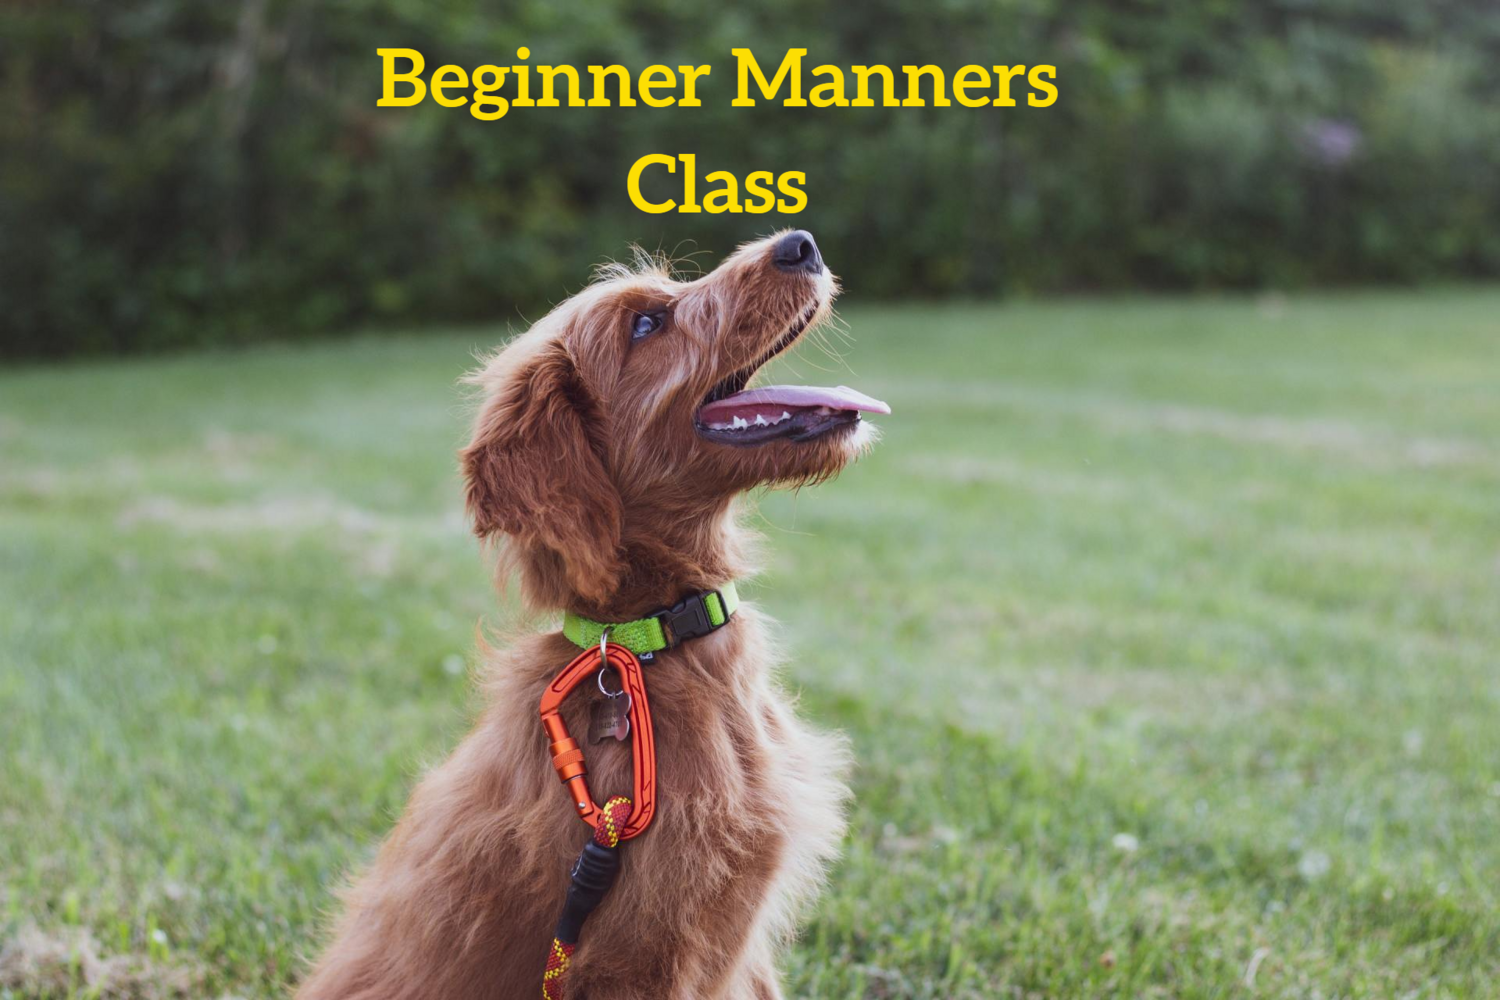 Beginner Manners. Mondays at 6:30pm (Starts June 3)
Trainer: Lindsay Consiglio-Jackson